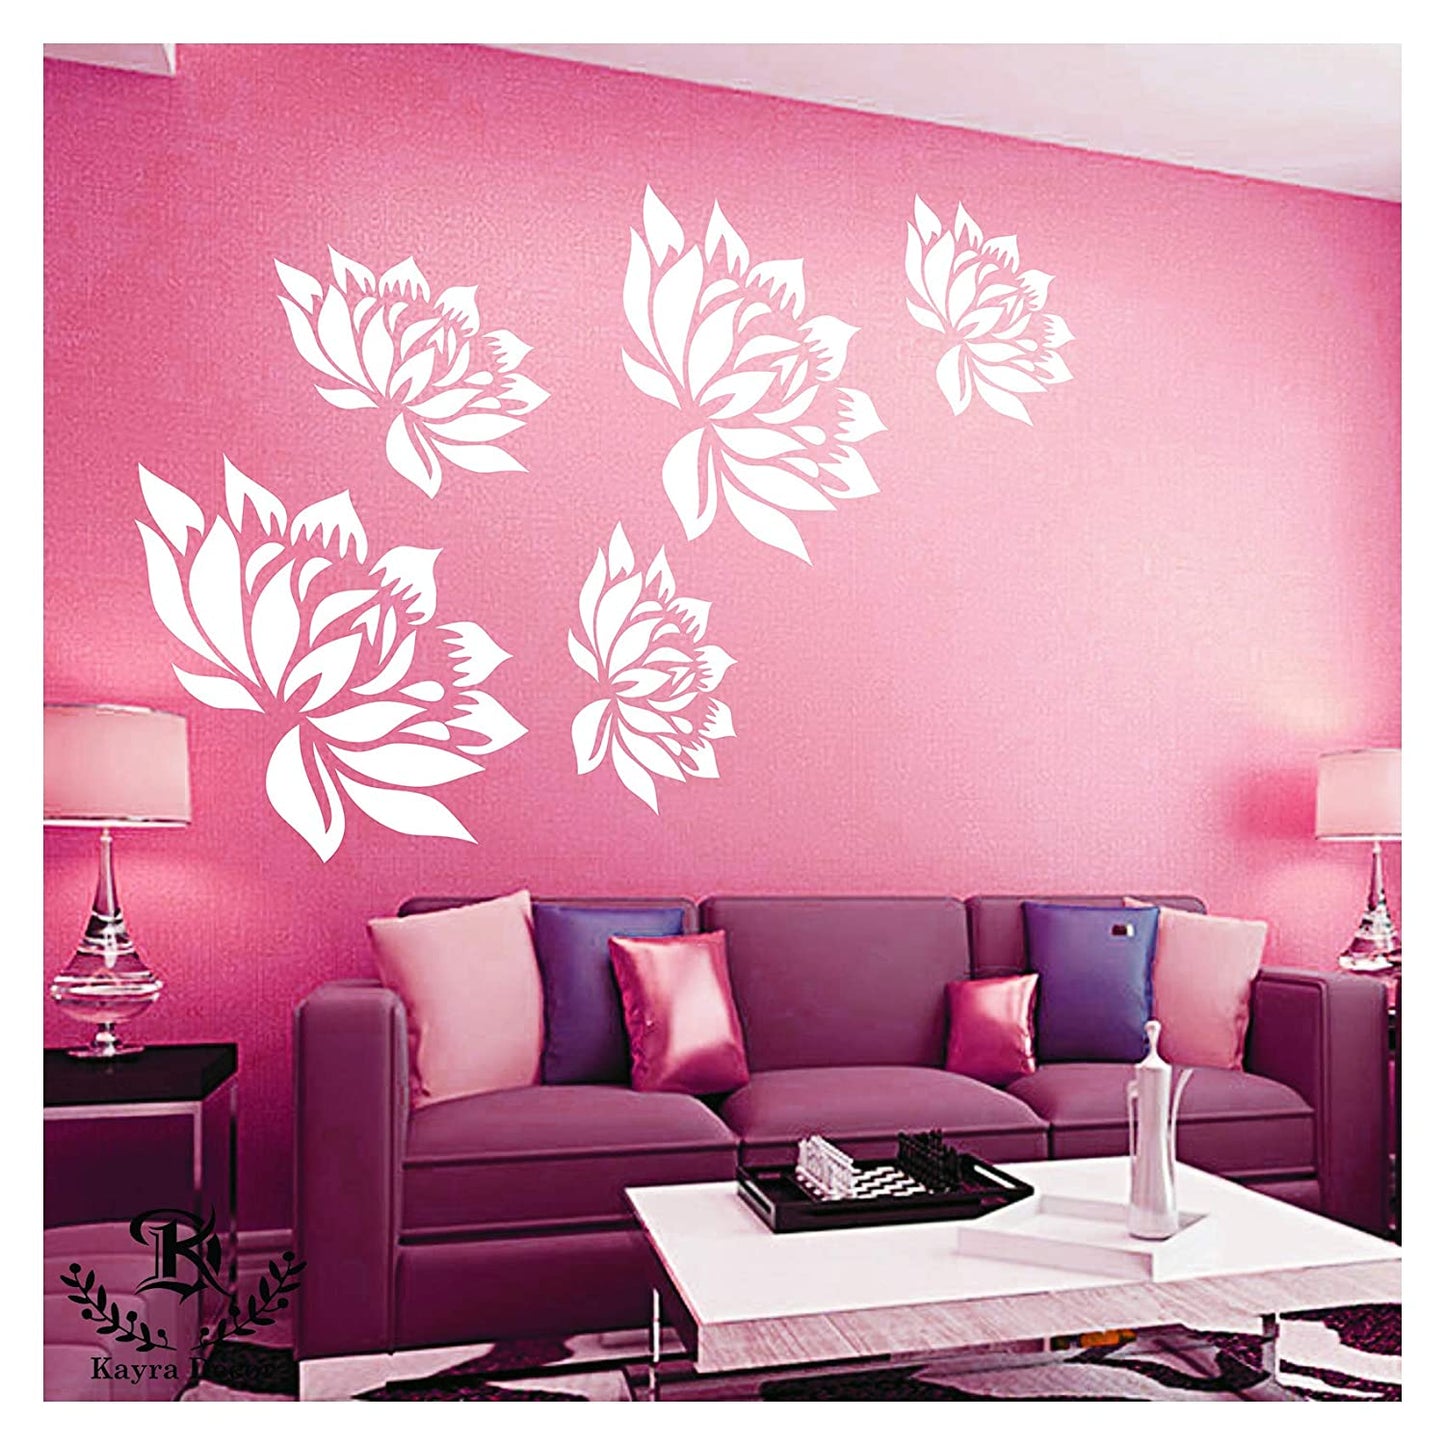 Lotus Flower Wall Design Stencil (KHSNT117)